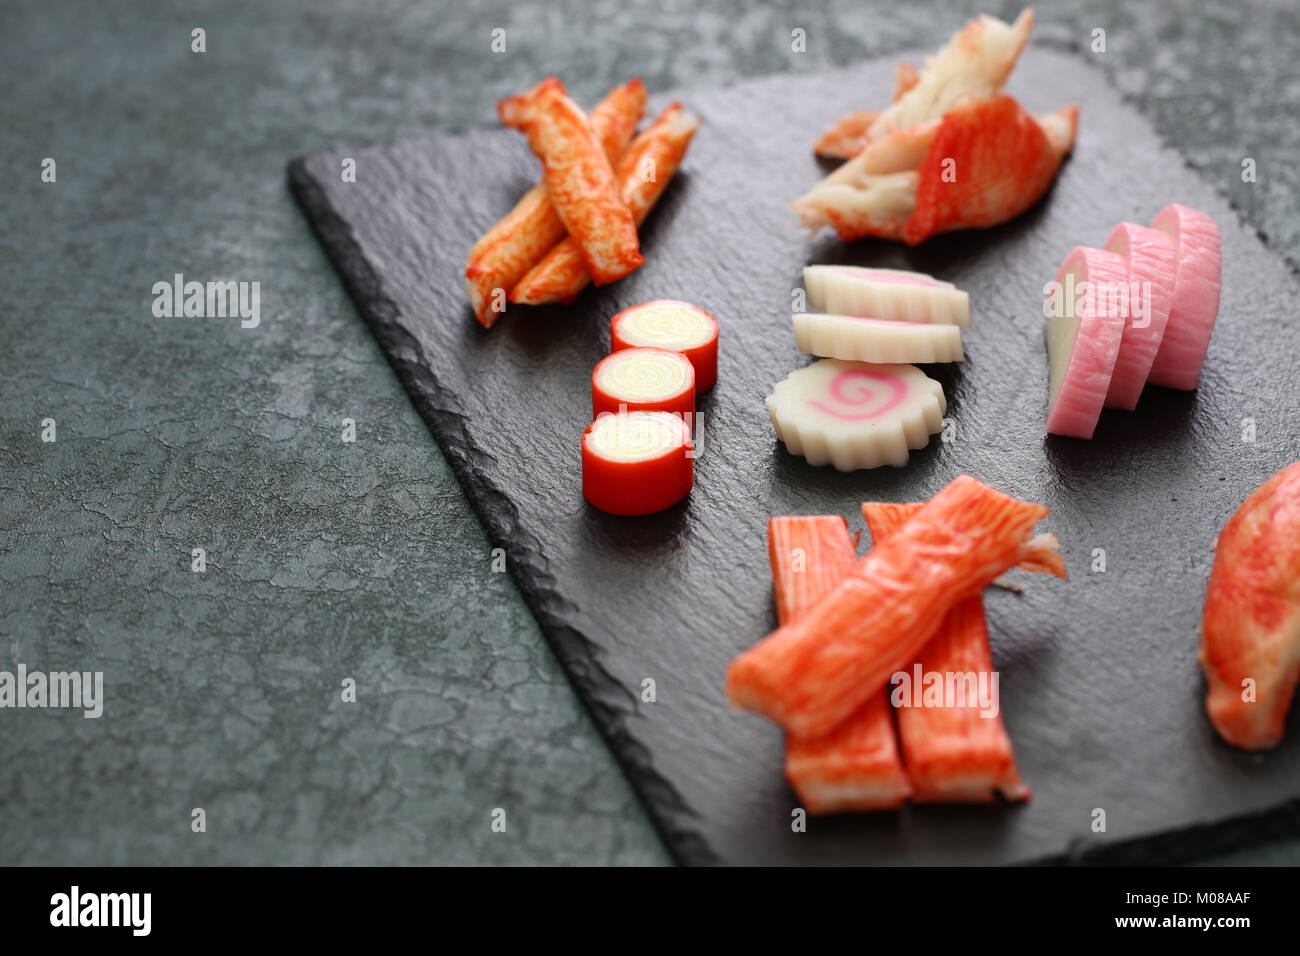 variety of surimi products, imitation crab sticks, japanese food Stock Photo